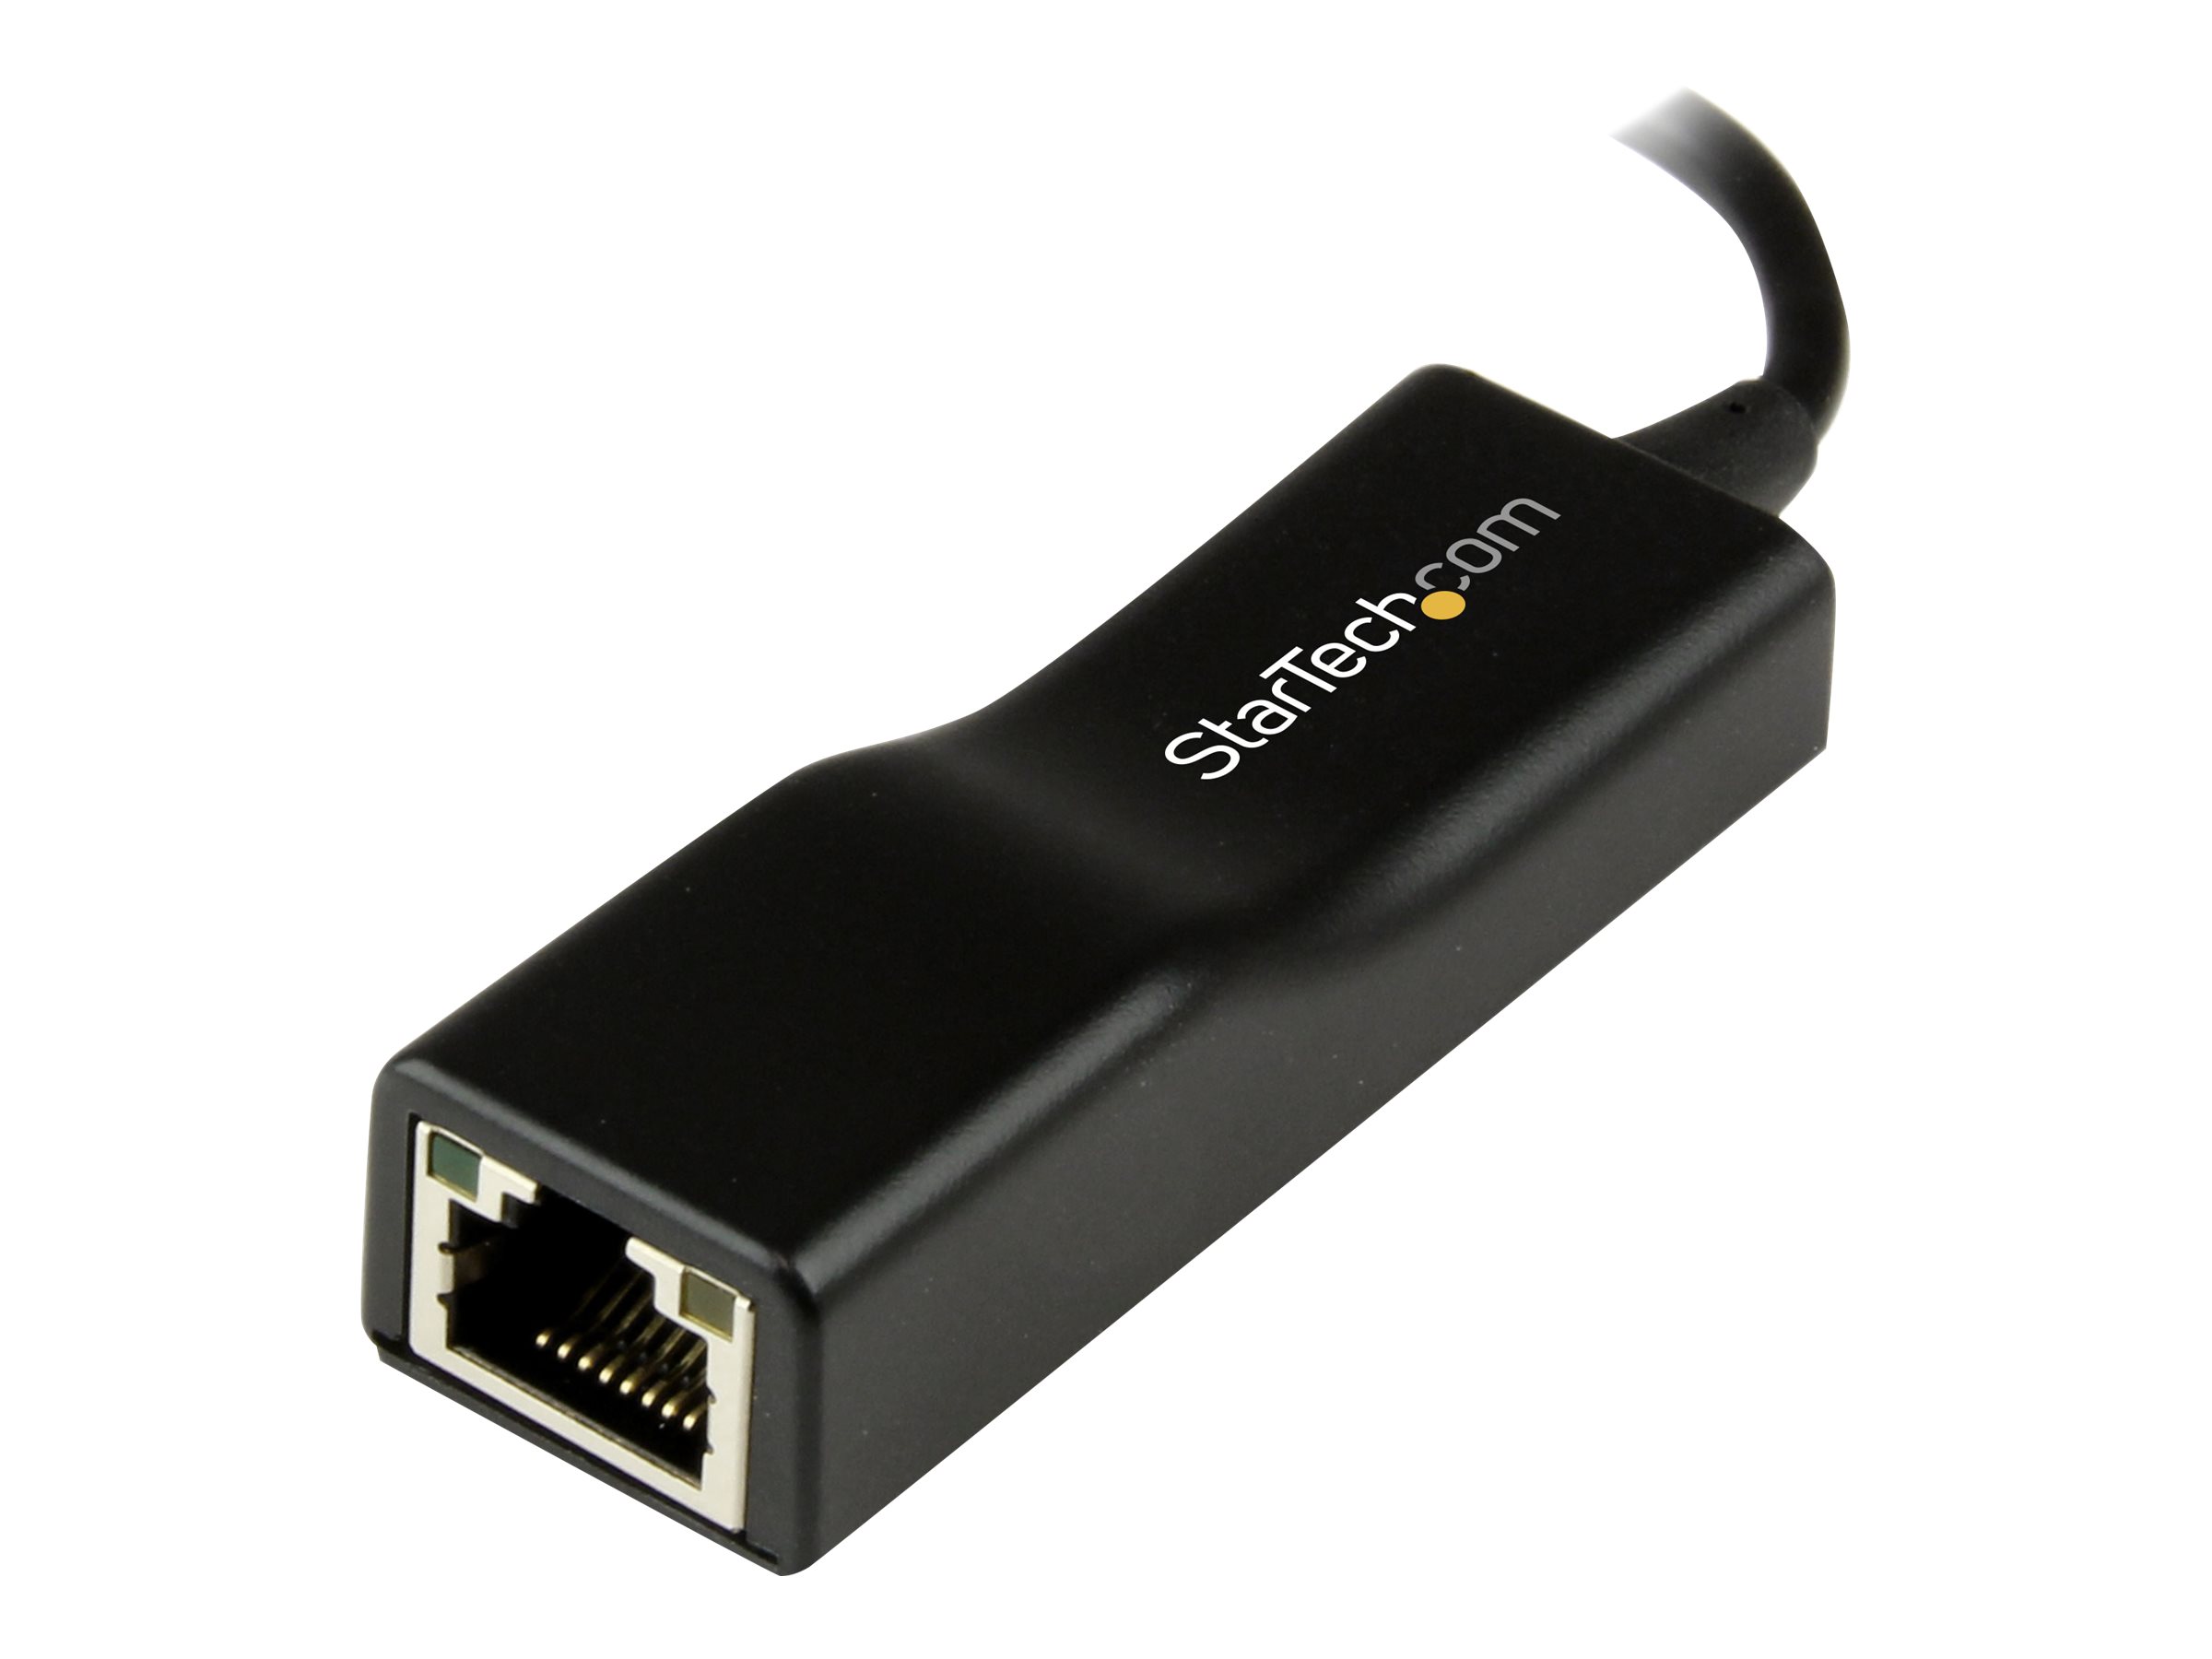 StarTech.com USB 2.0 RJ45 Fast Ethernet Adapter - Lan Nic USB Netzwerkadapter - USB 2.0 10/100 Mbit Adapter in Schwarz - Netzwerkadapter - USB 2.0 - 10/100 Ethernet